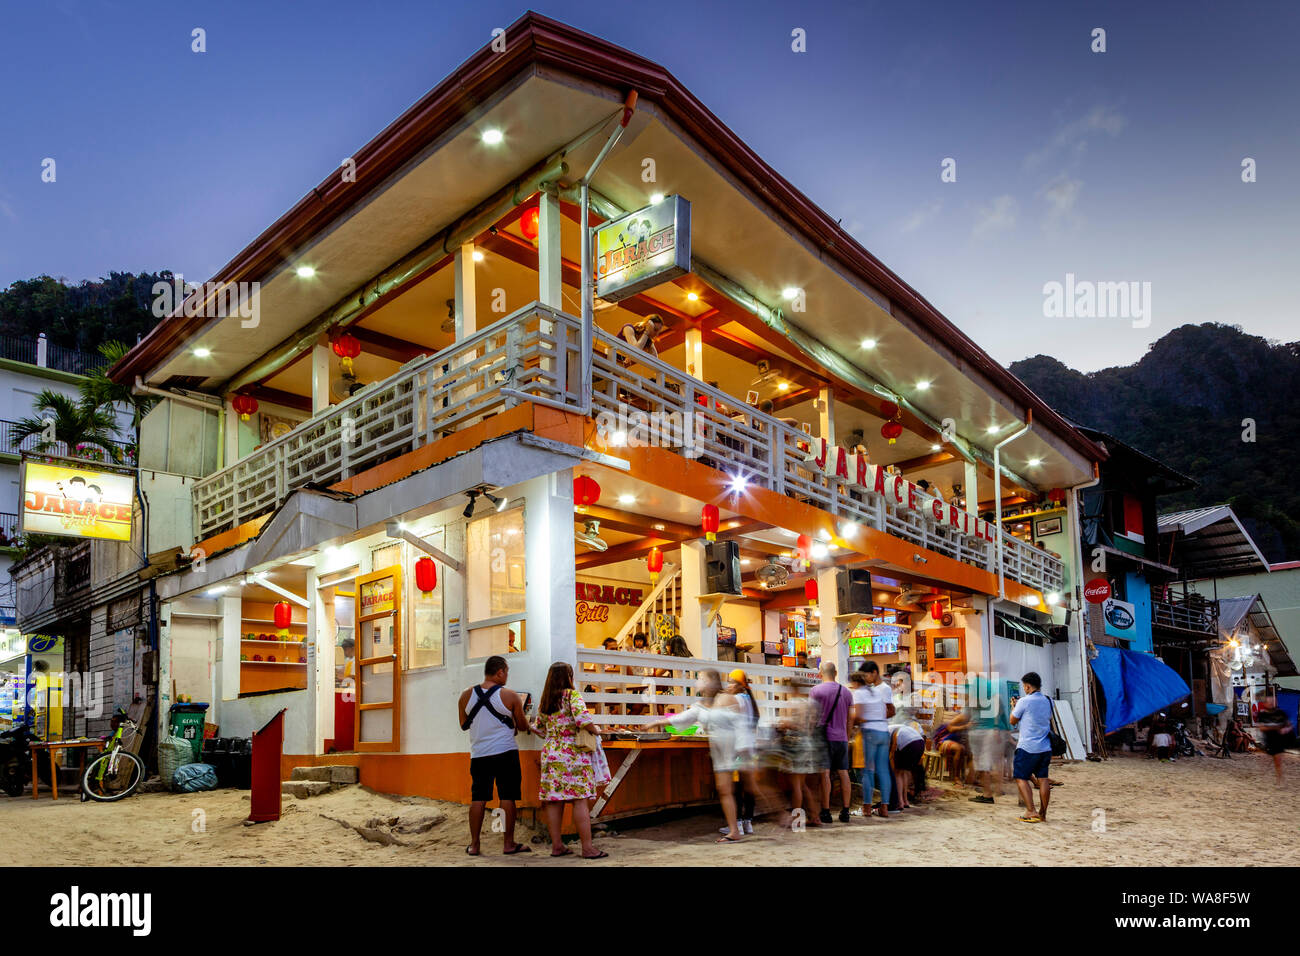 The Exterior Of The Jarace Grill Beachfront Restaurant, El Nido, Palawan Island, The Philippines Stock Photo